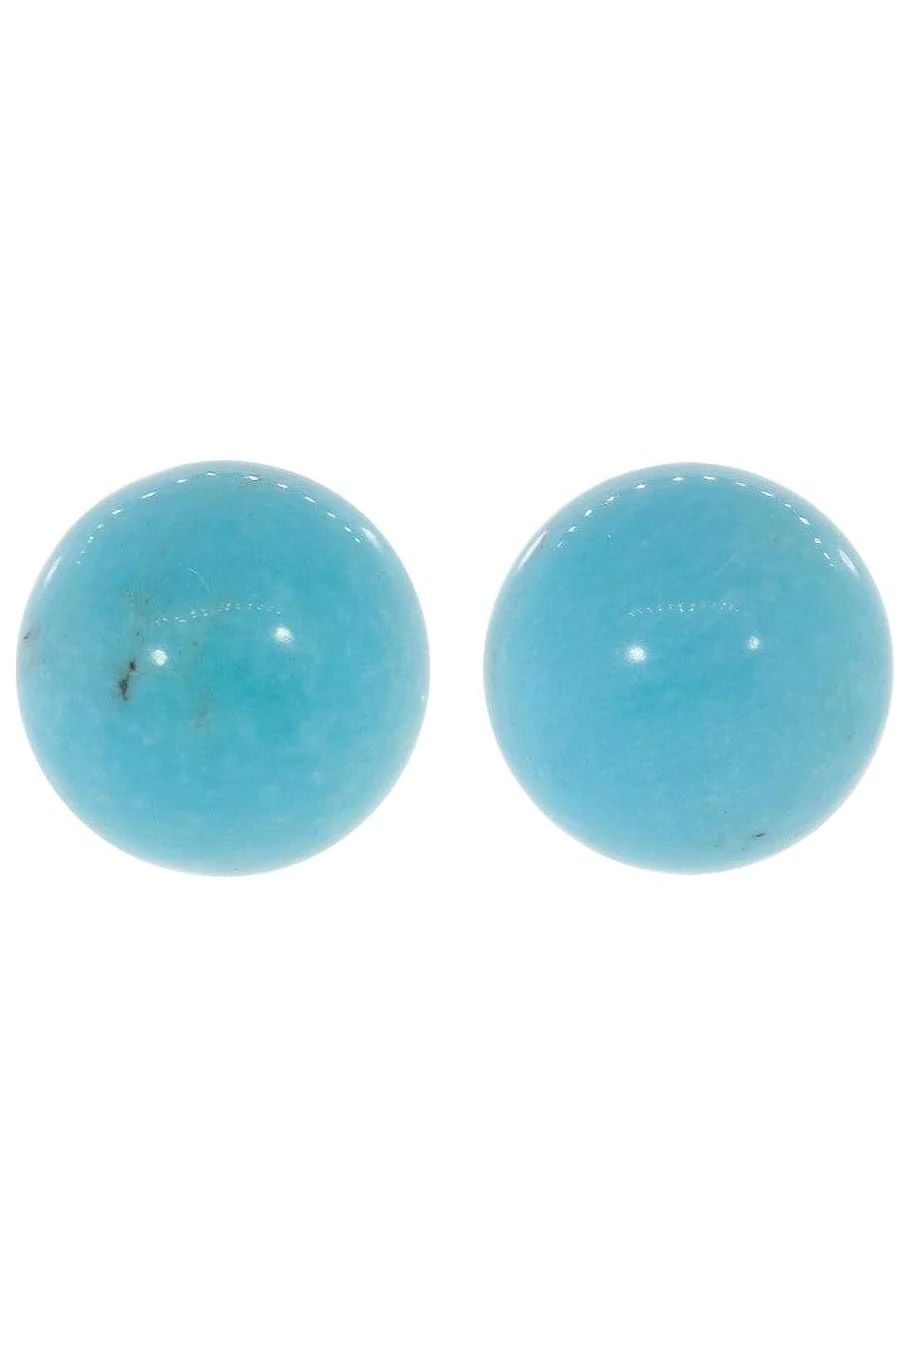 Kingman Turquoise Stud Earrings | Marissa Collections